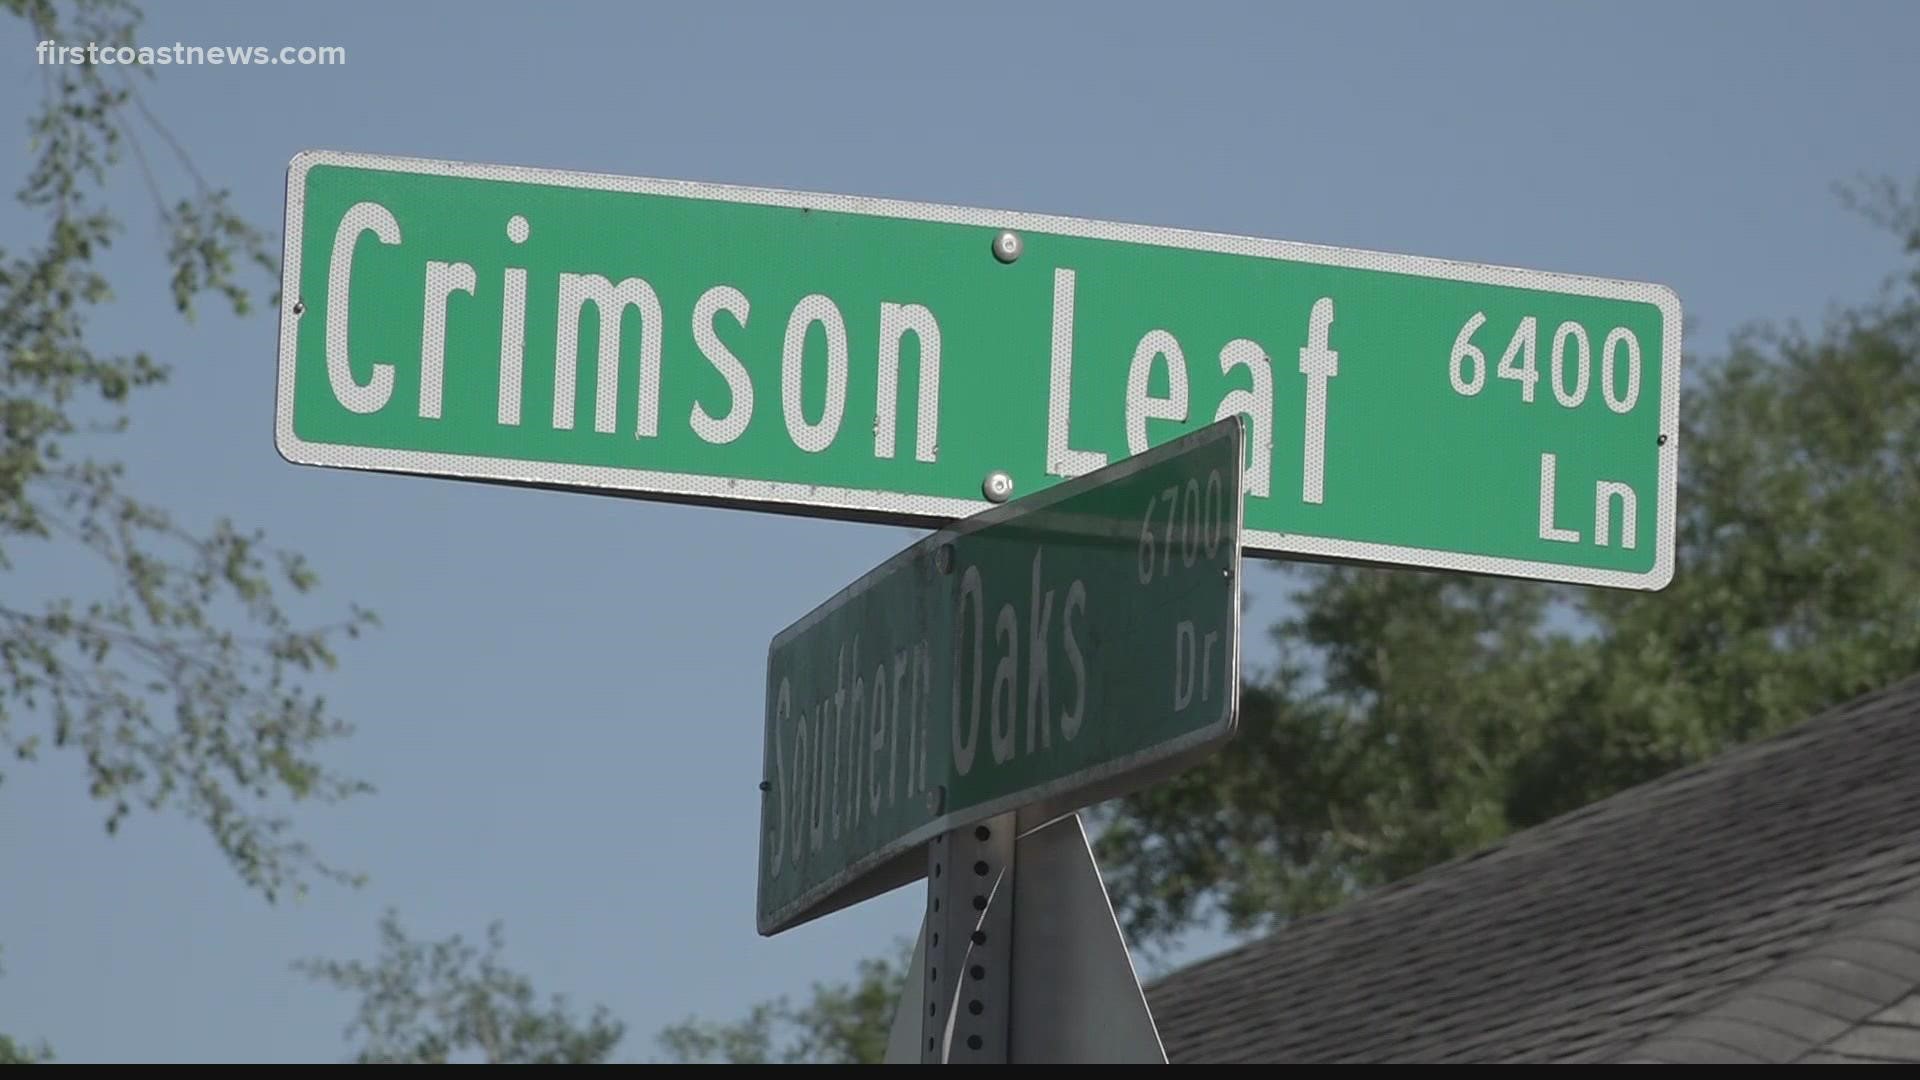 The incident happened on Crimson Leaf Lane around 12:45 p.m..